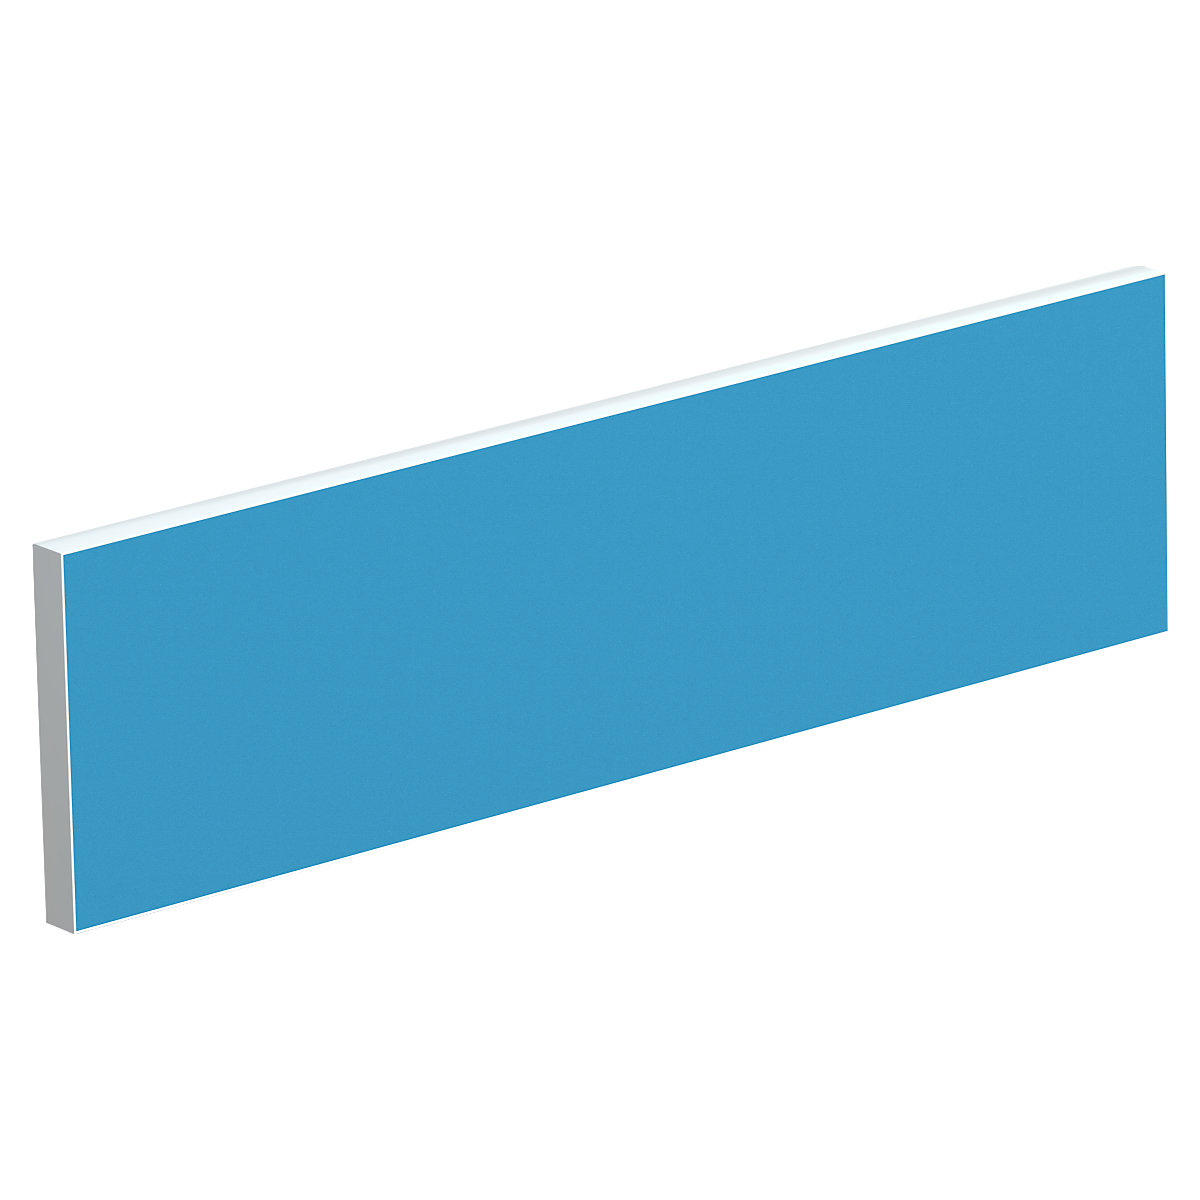 Table partition for team desks, width 1400 mm, blue cover-4